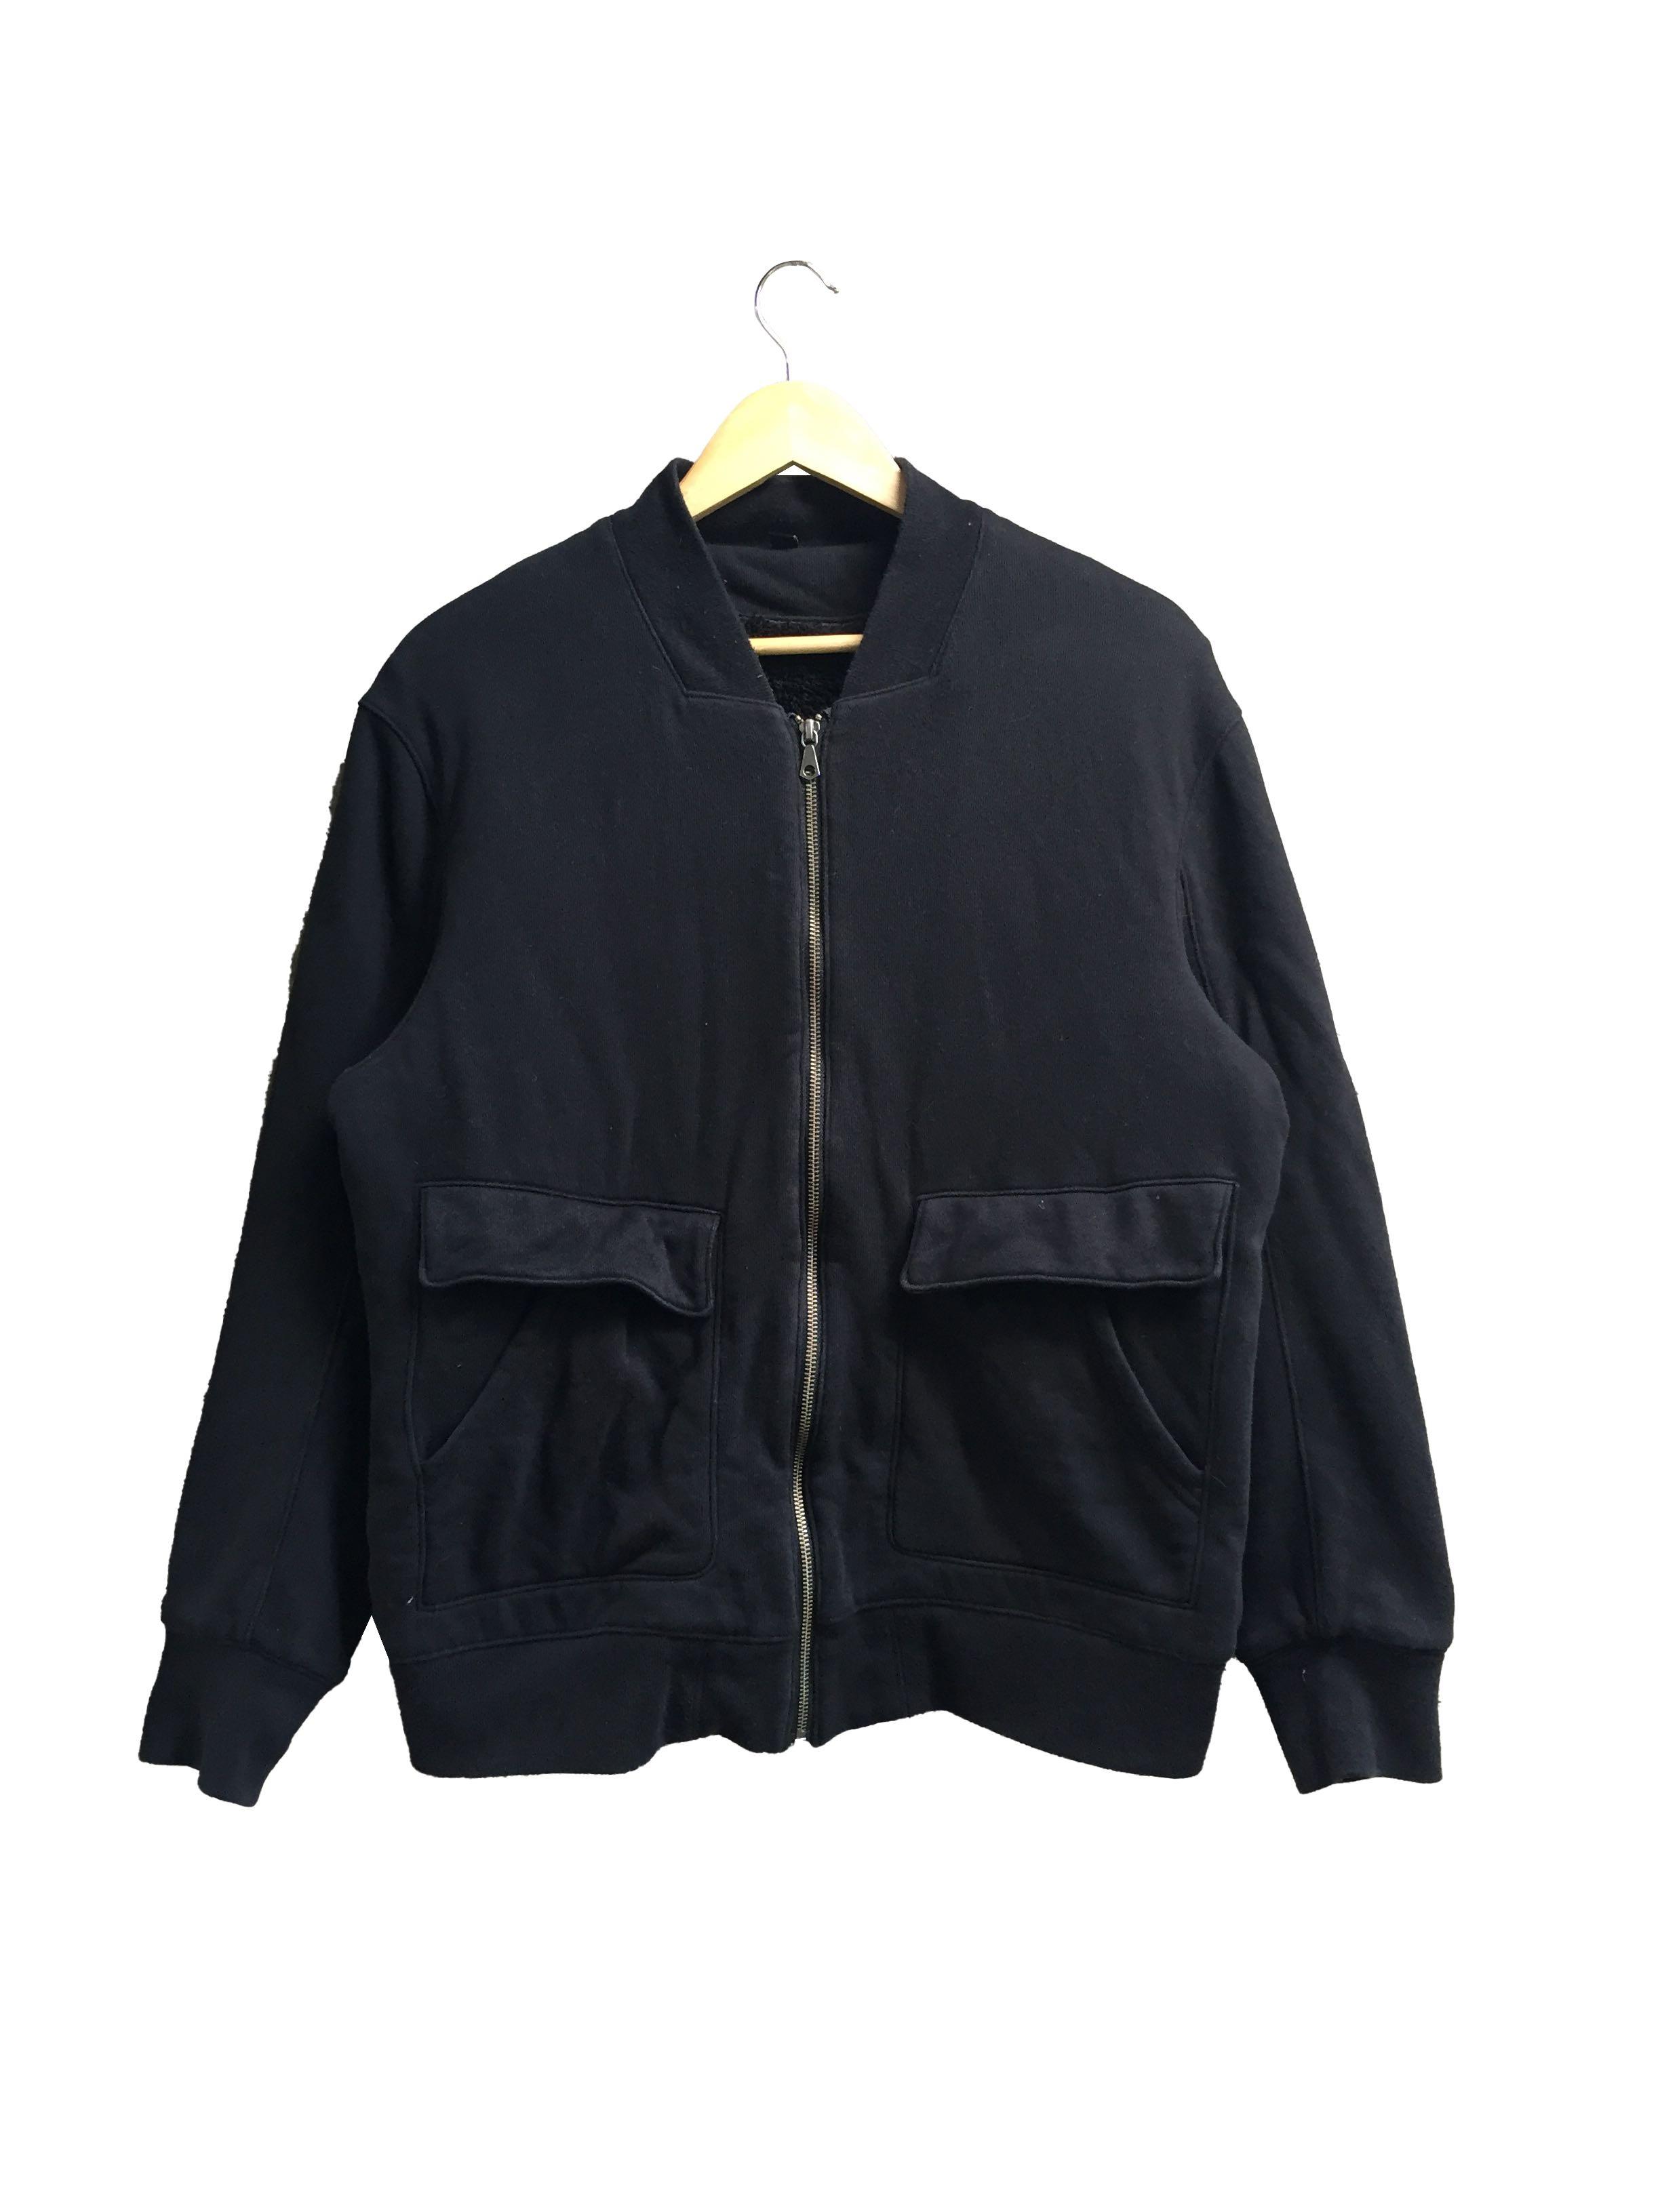 Uniqlo Bomber Jacket, Men's Fashion, Coats, Jackets and Outerwear on ...